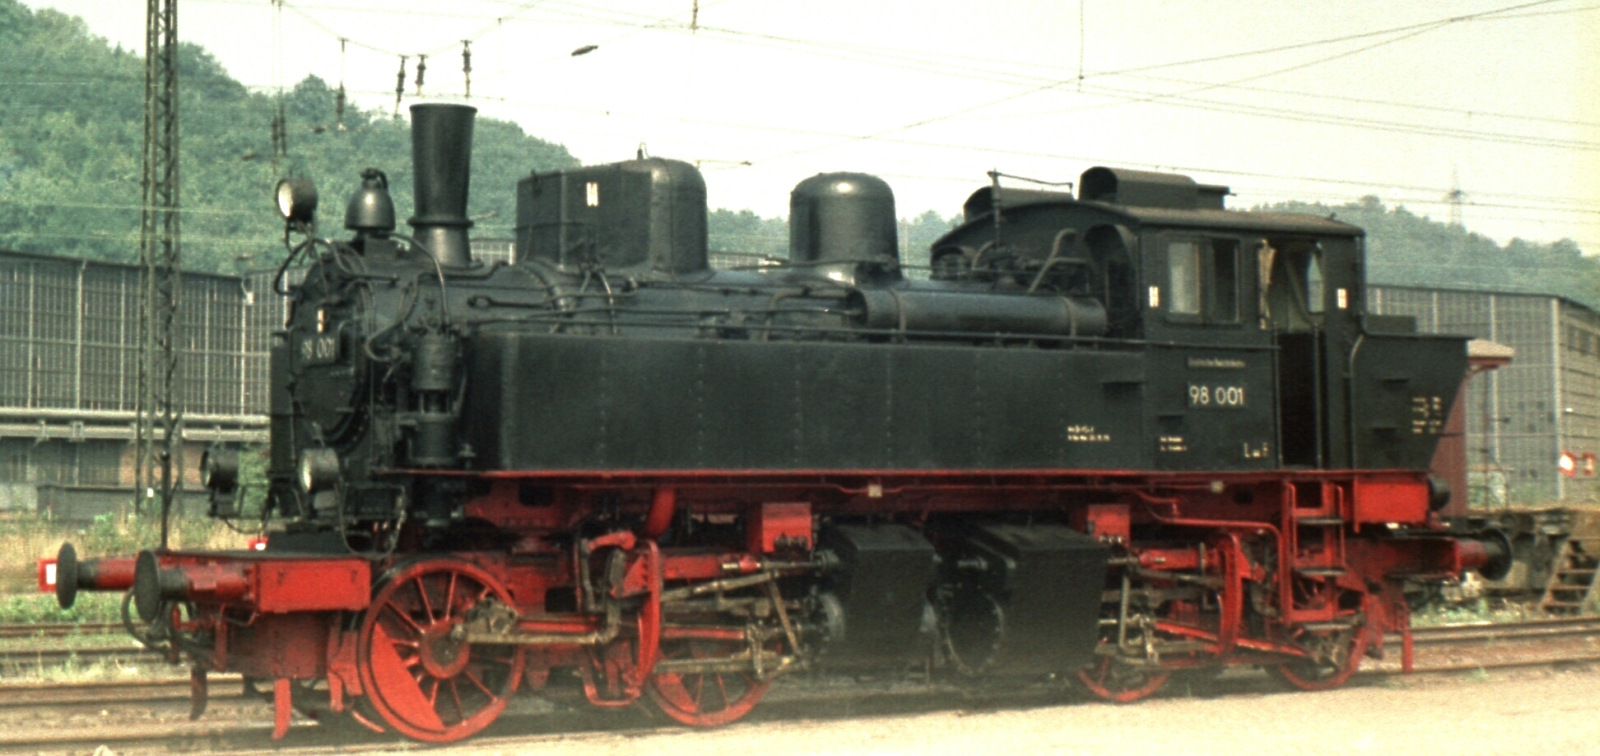 98 001 in August 1983 in Freital-Hainsberg